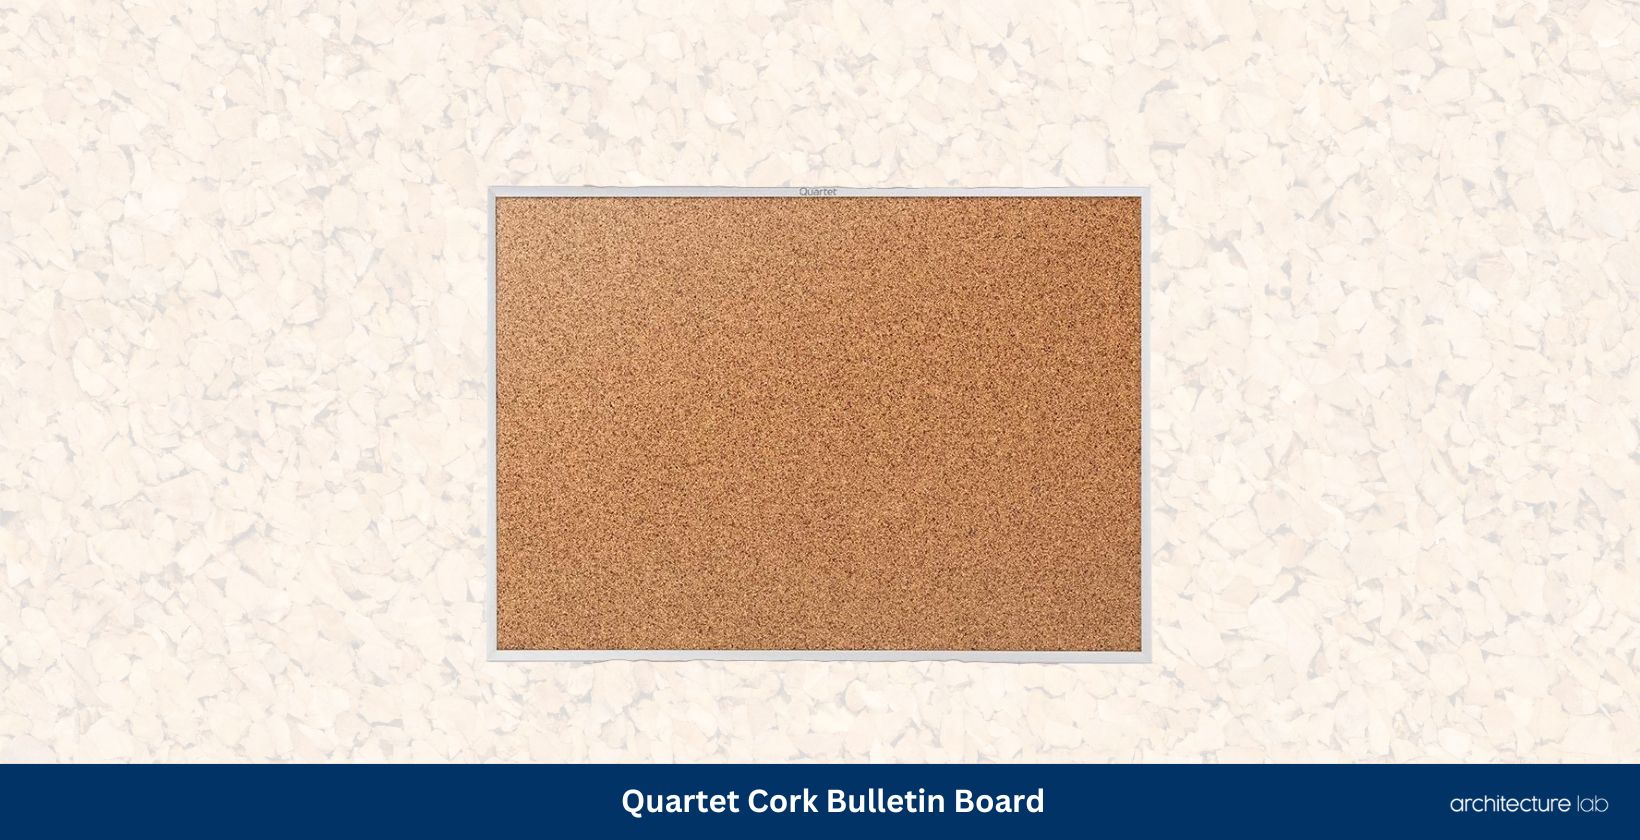 Quartet cork bulletin board